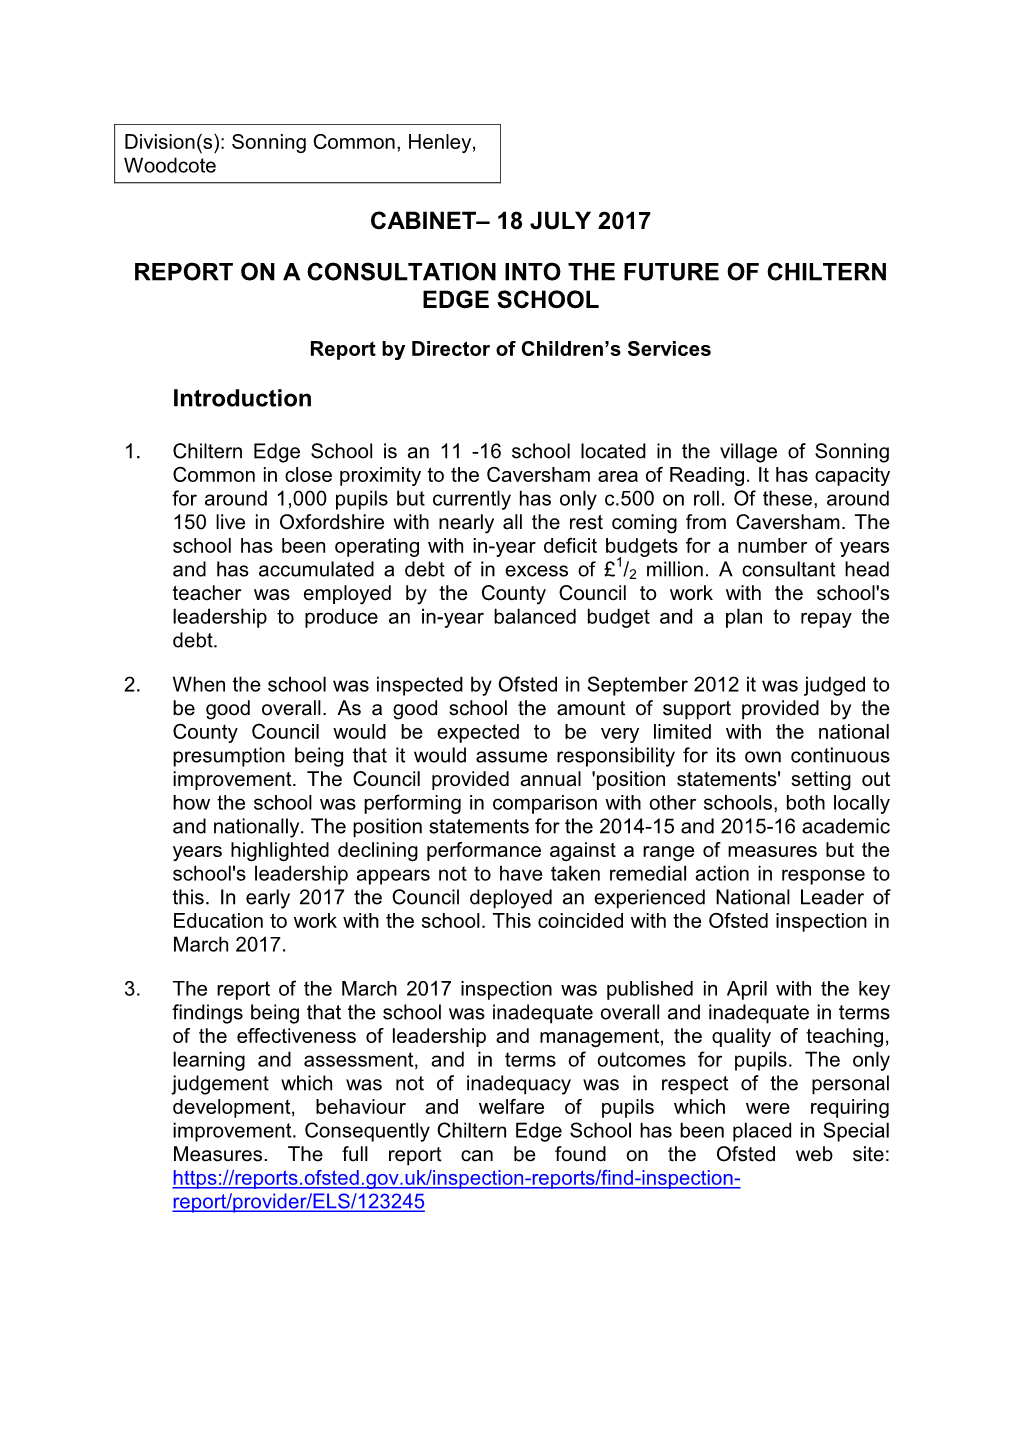 The Future of Chiltern Edge School PDF 211 KB